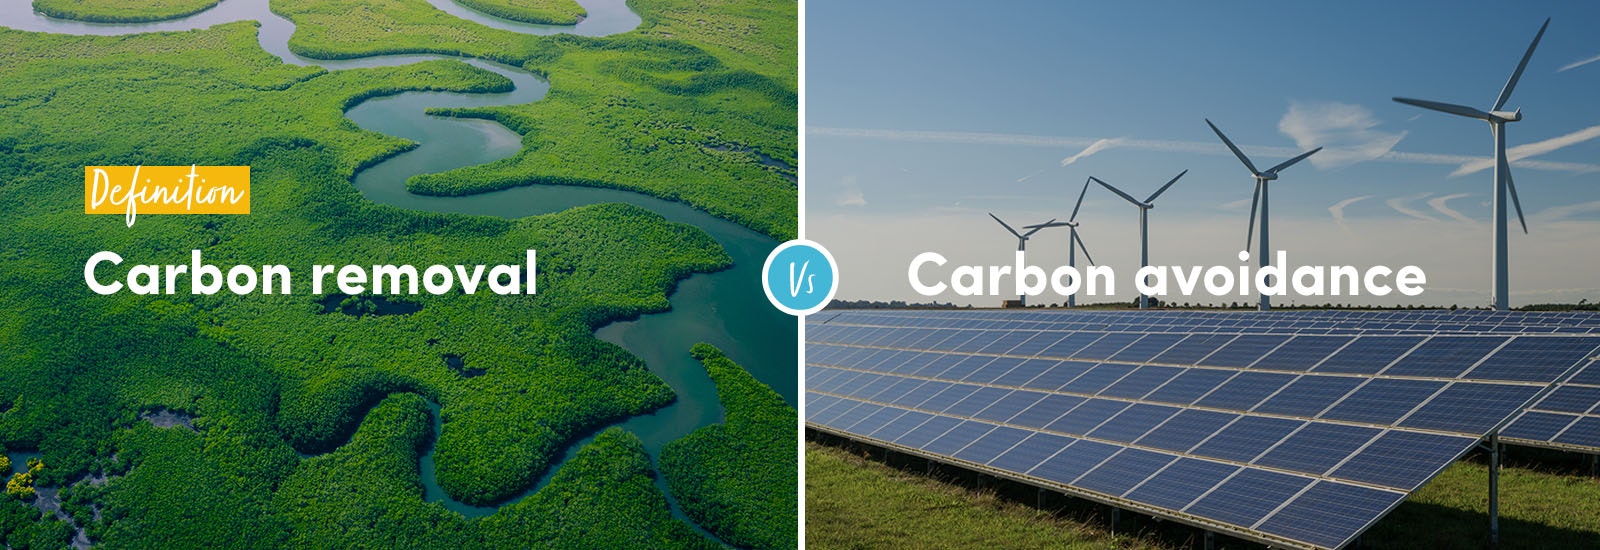 Definition - carbon removal vs. carbon avoidance